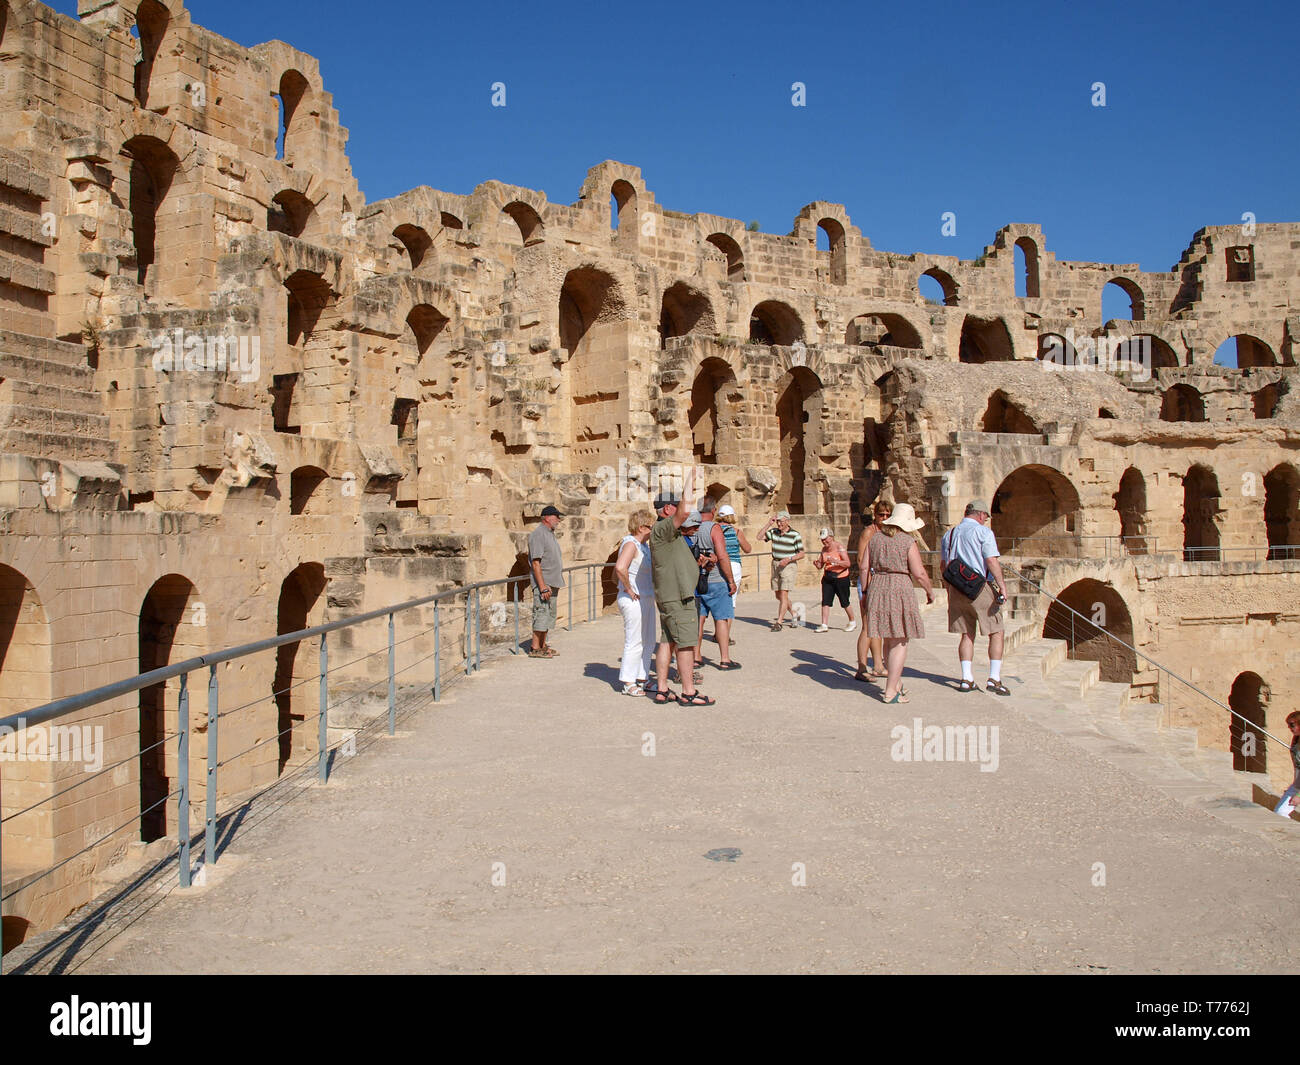 El Djem, Mahdia, Tunisia - 16.05.2012 Ancient Roman amphitheater in El Jem in Tunisia, horizontal photo Stock Photo